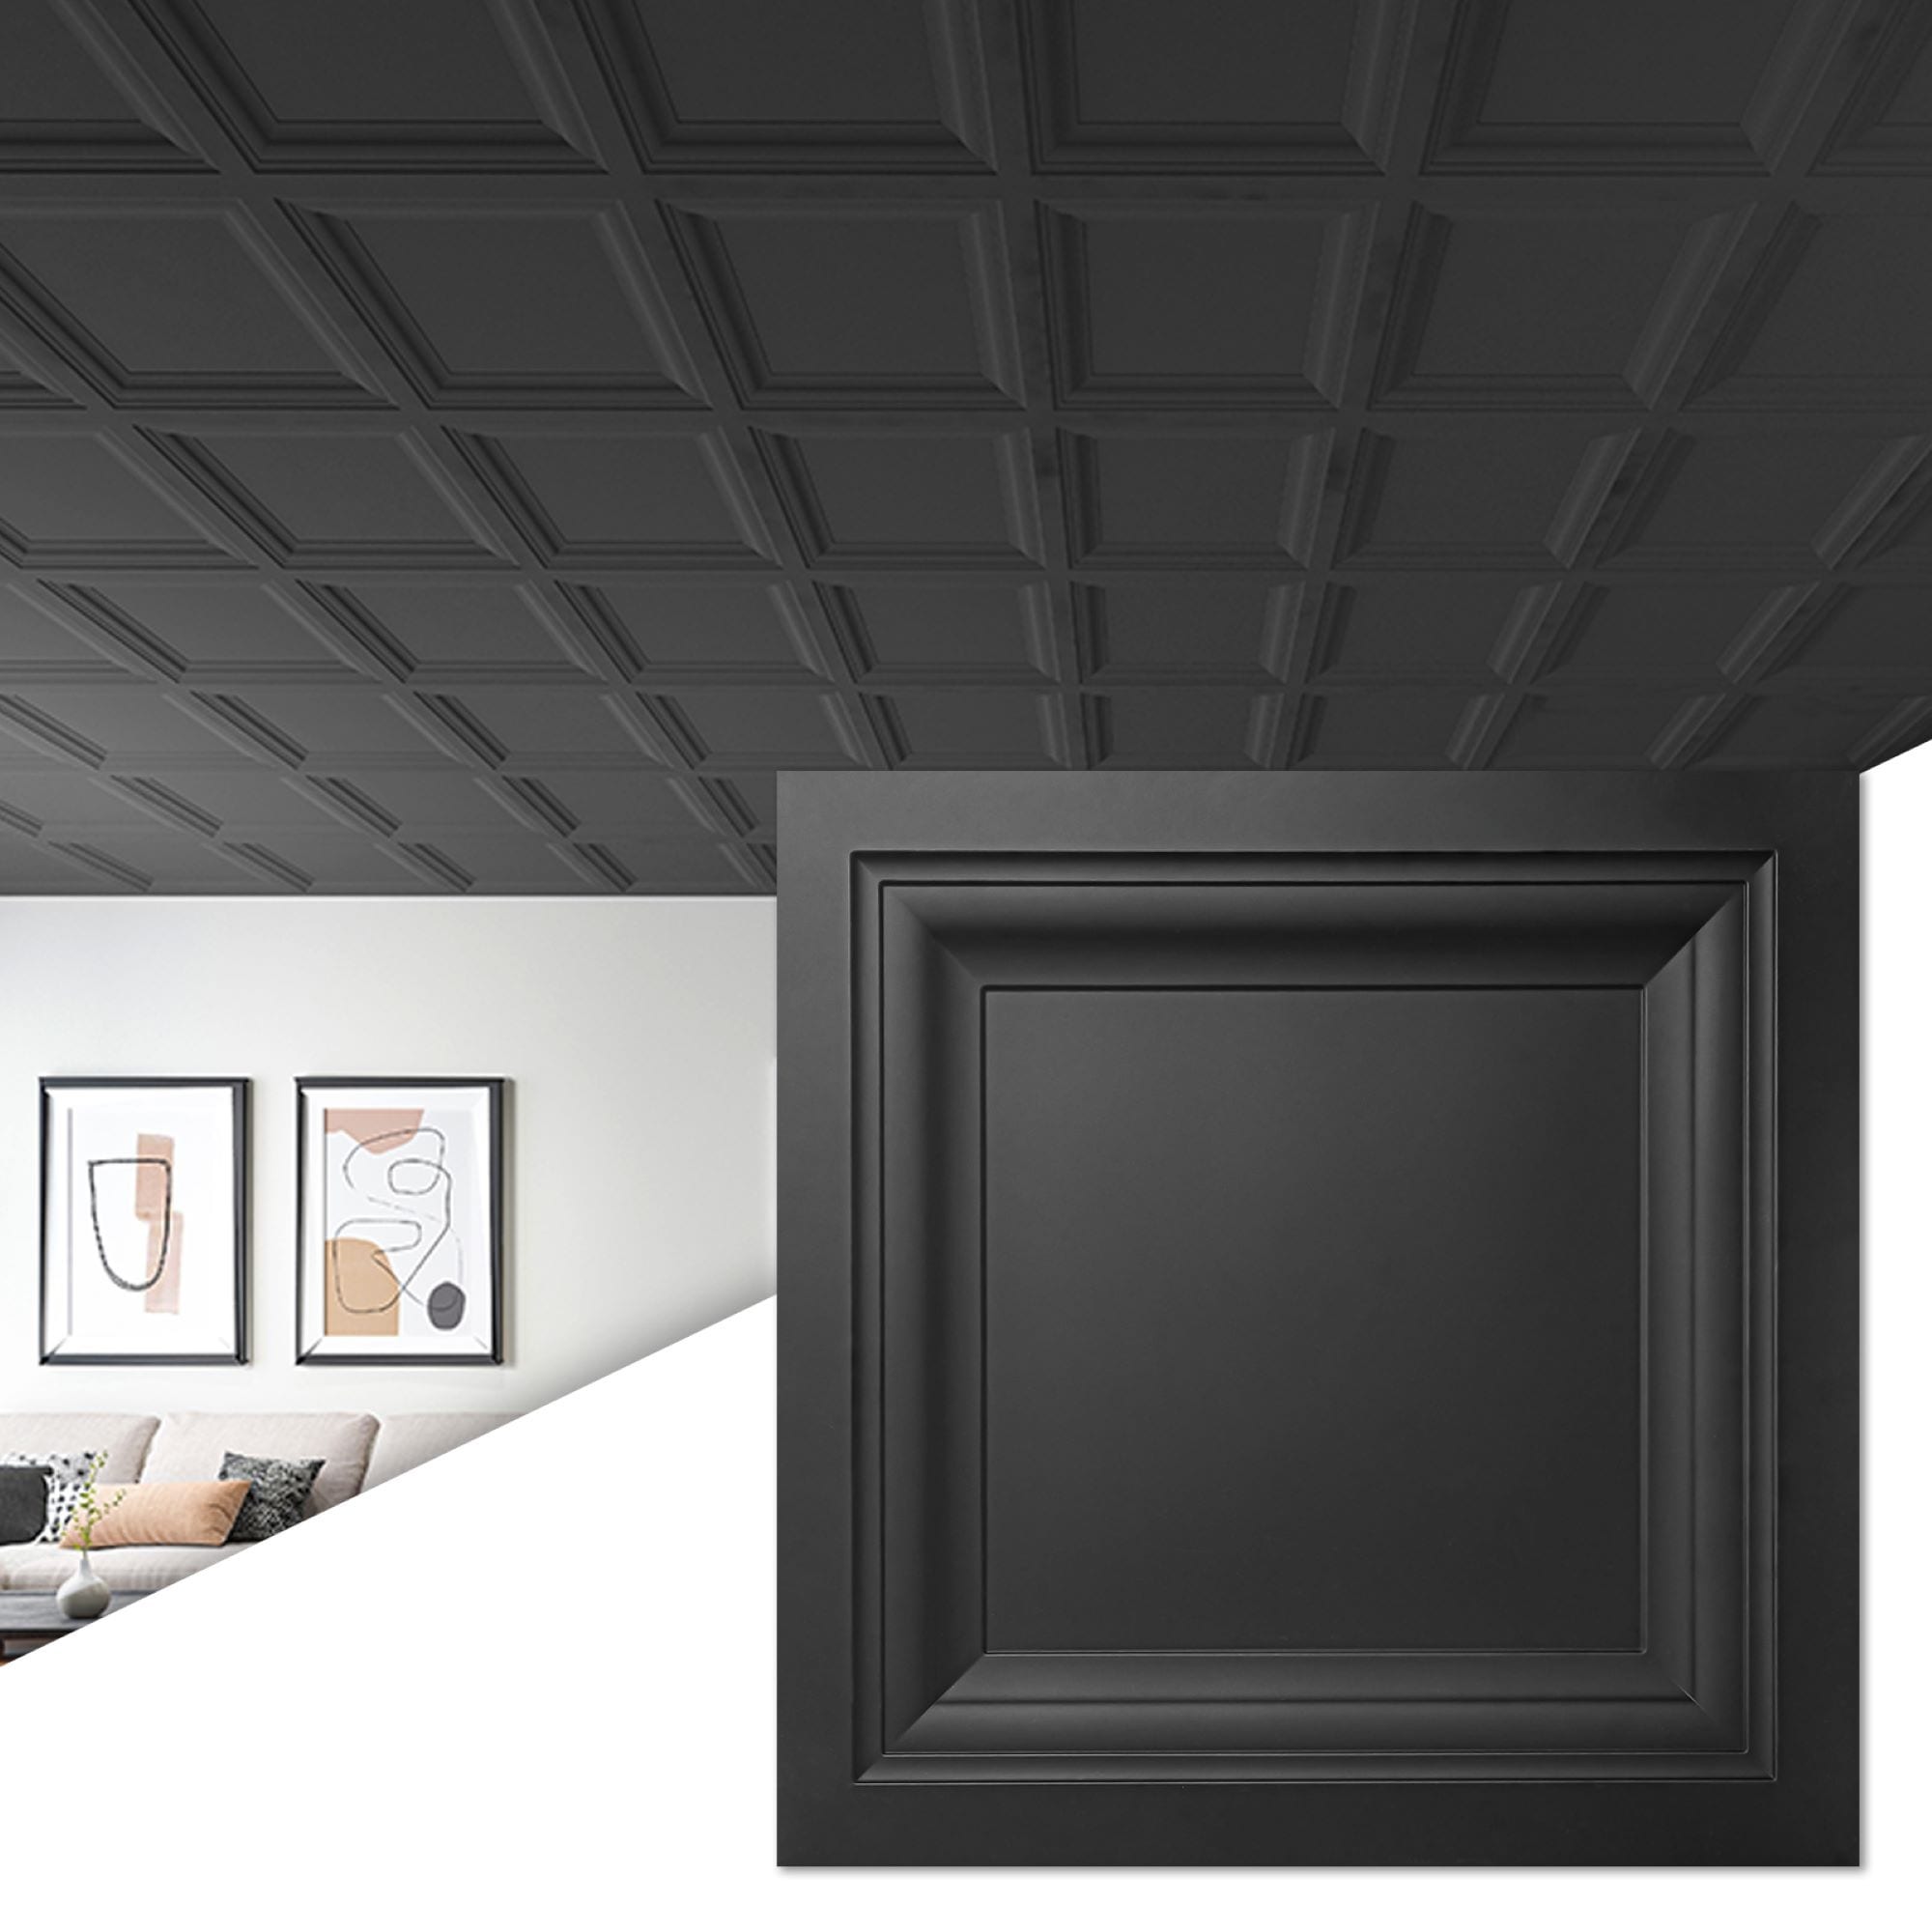 Art3d Decorative Ceiling Tile 2x2 Glue up, Suspended Ceiling Tile Pack of  12pcs Black Floral